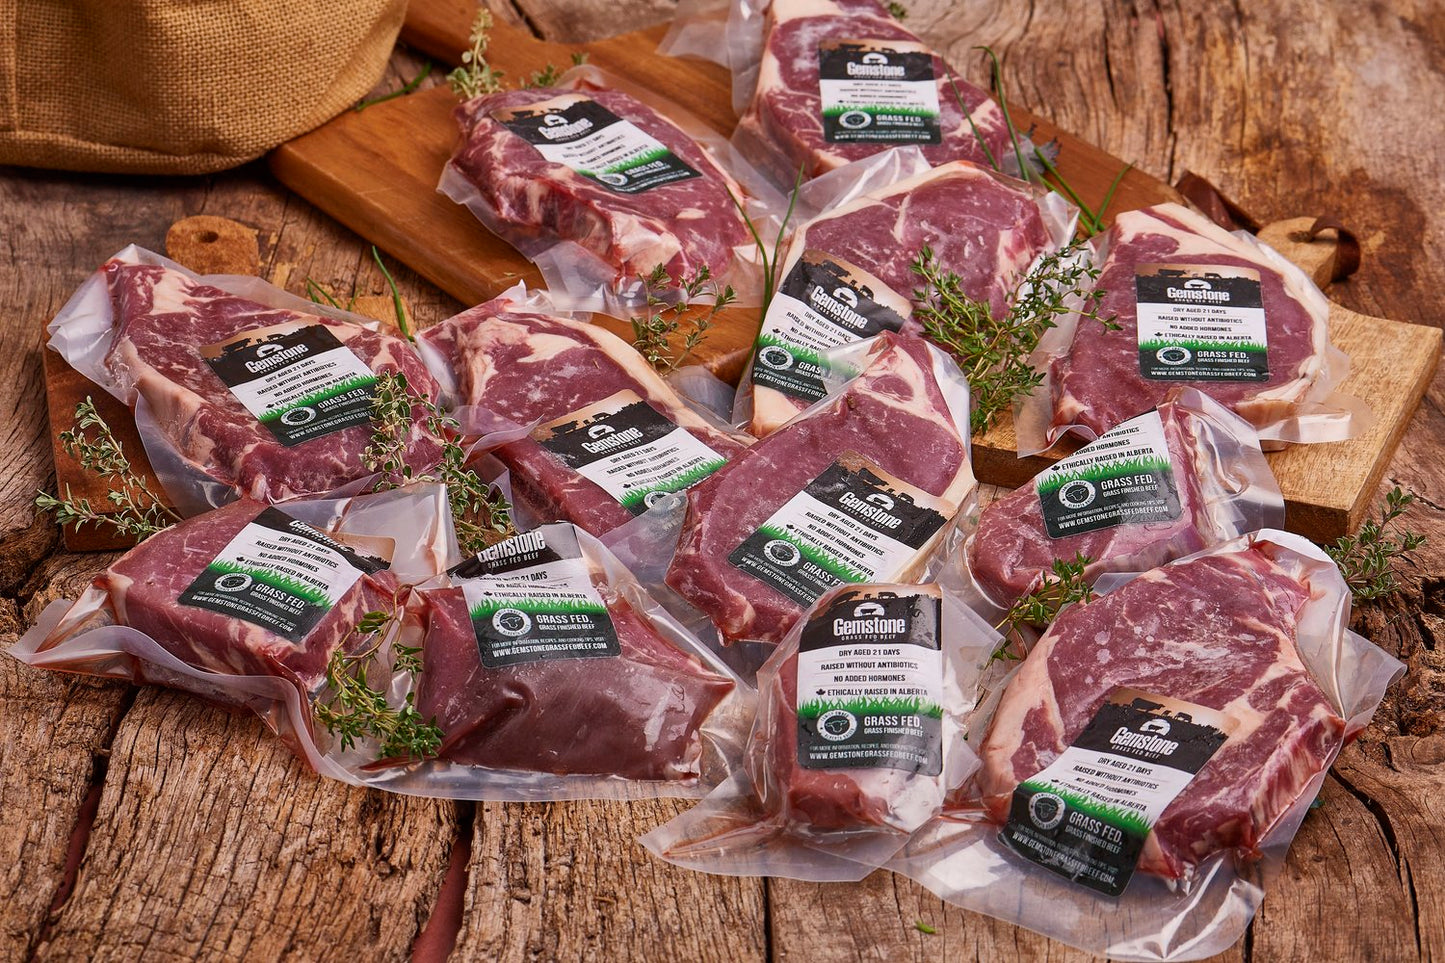 Steak and Ground Beef Bundle - Save on ground beef